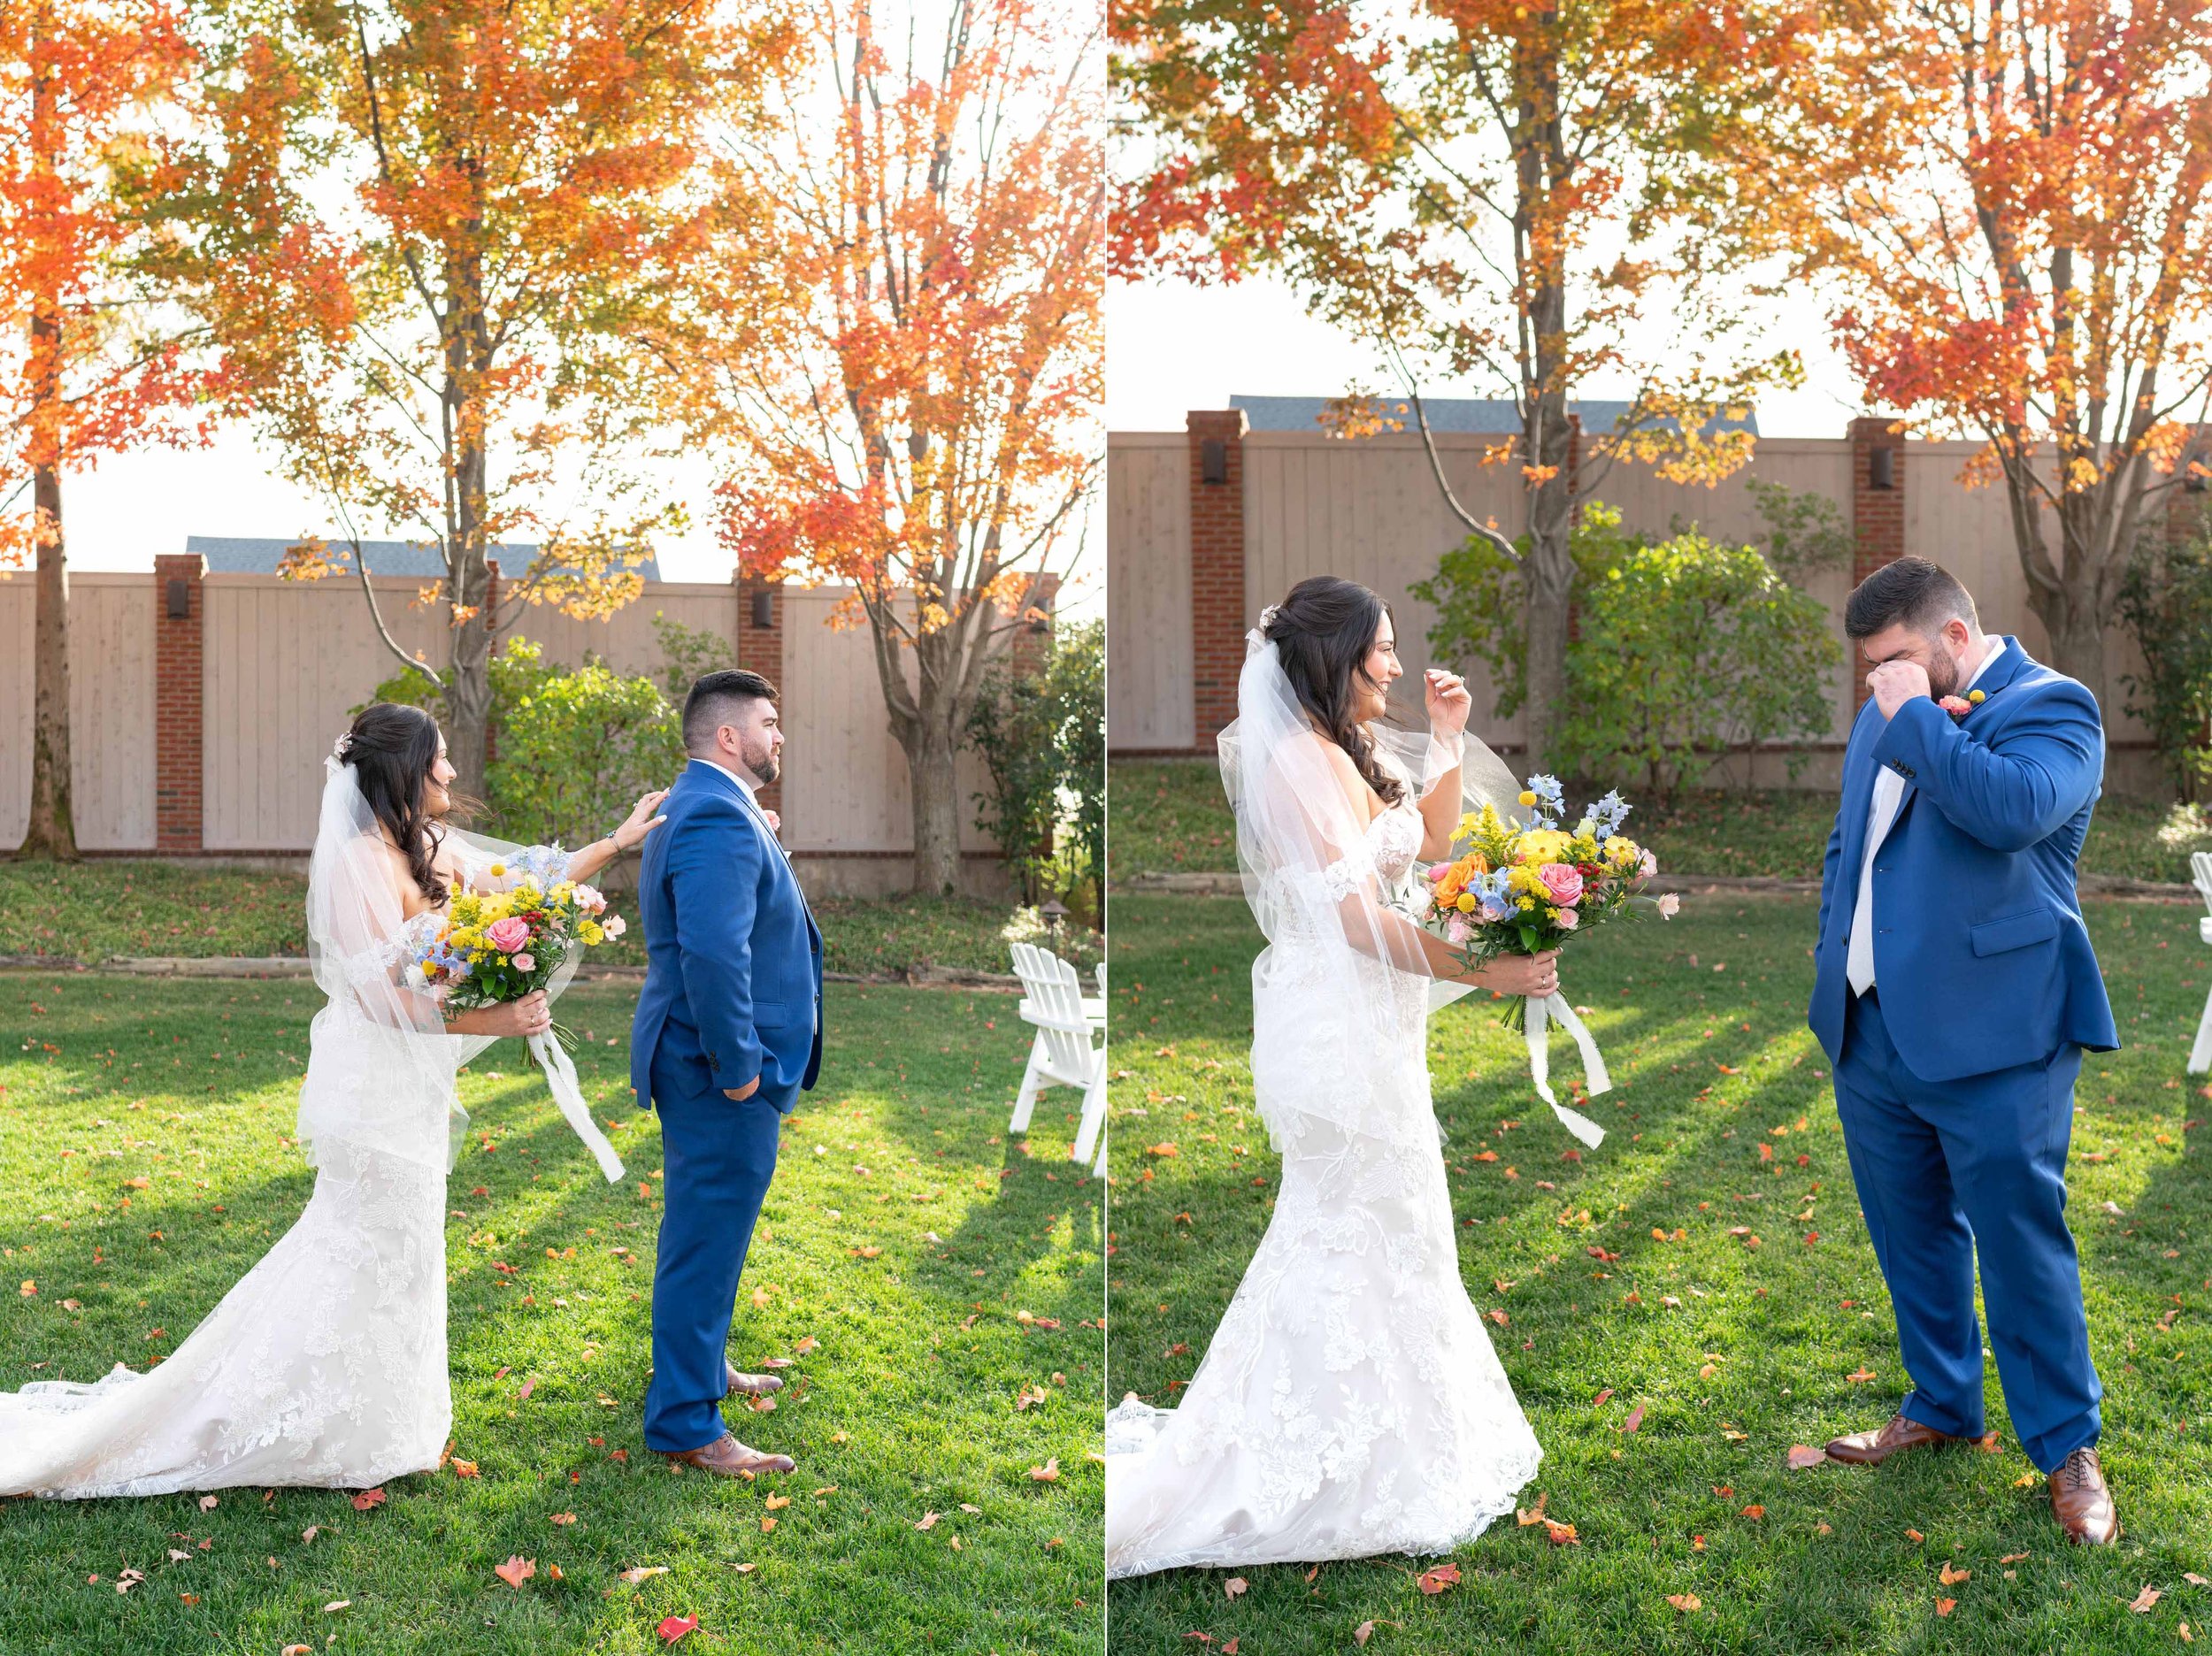 First look at fall wedding photos on the lawn at Chesapeake Bay Beach Club